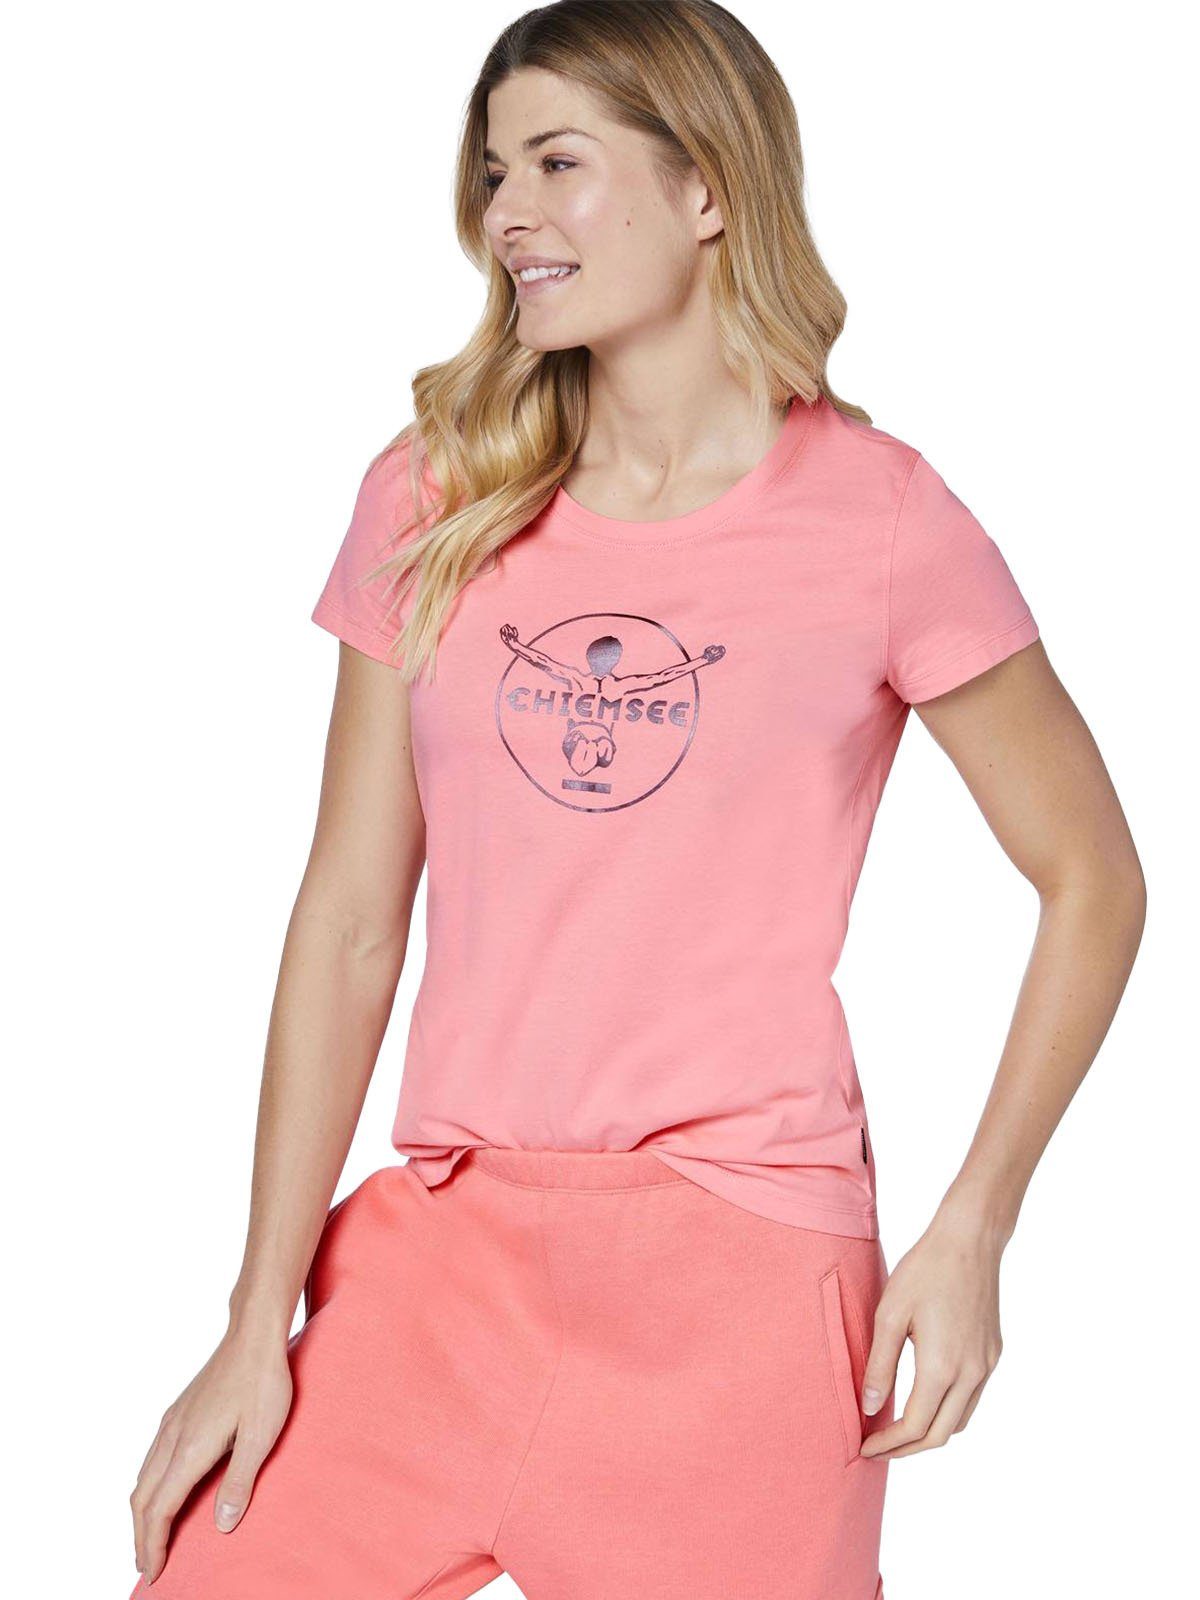 Baumwolle Shirt, Taormina, T-Shirt T-Shirt Rosa - Chiemsee Damen